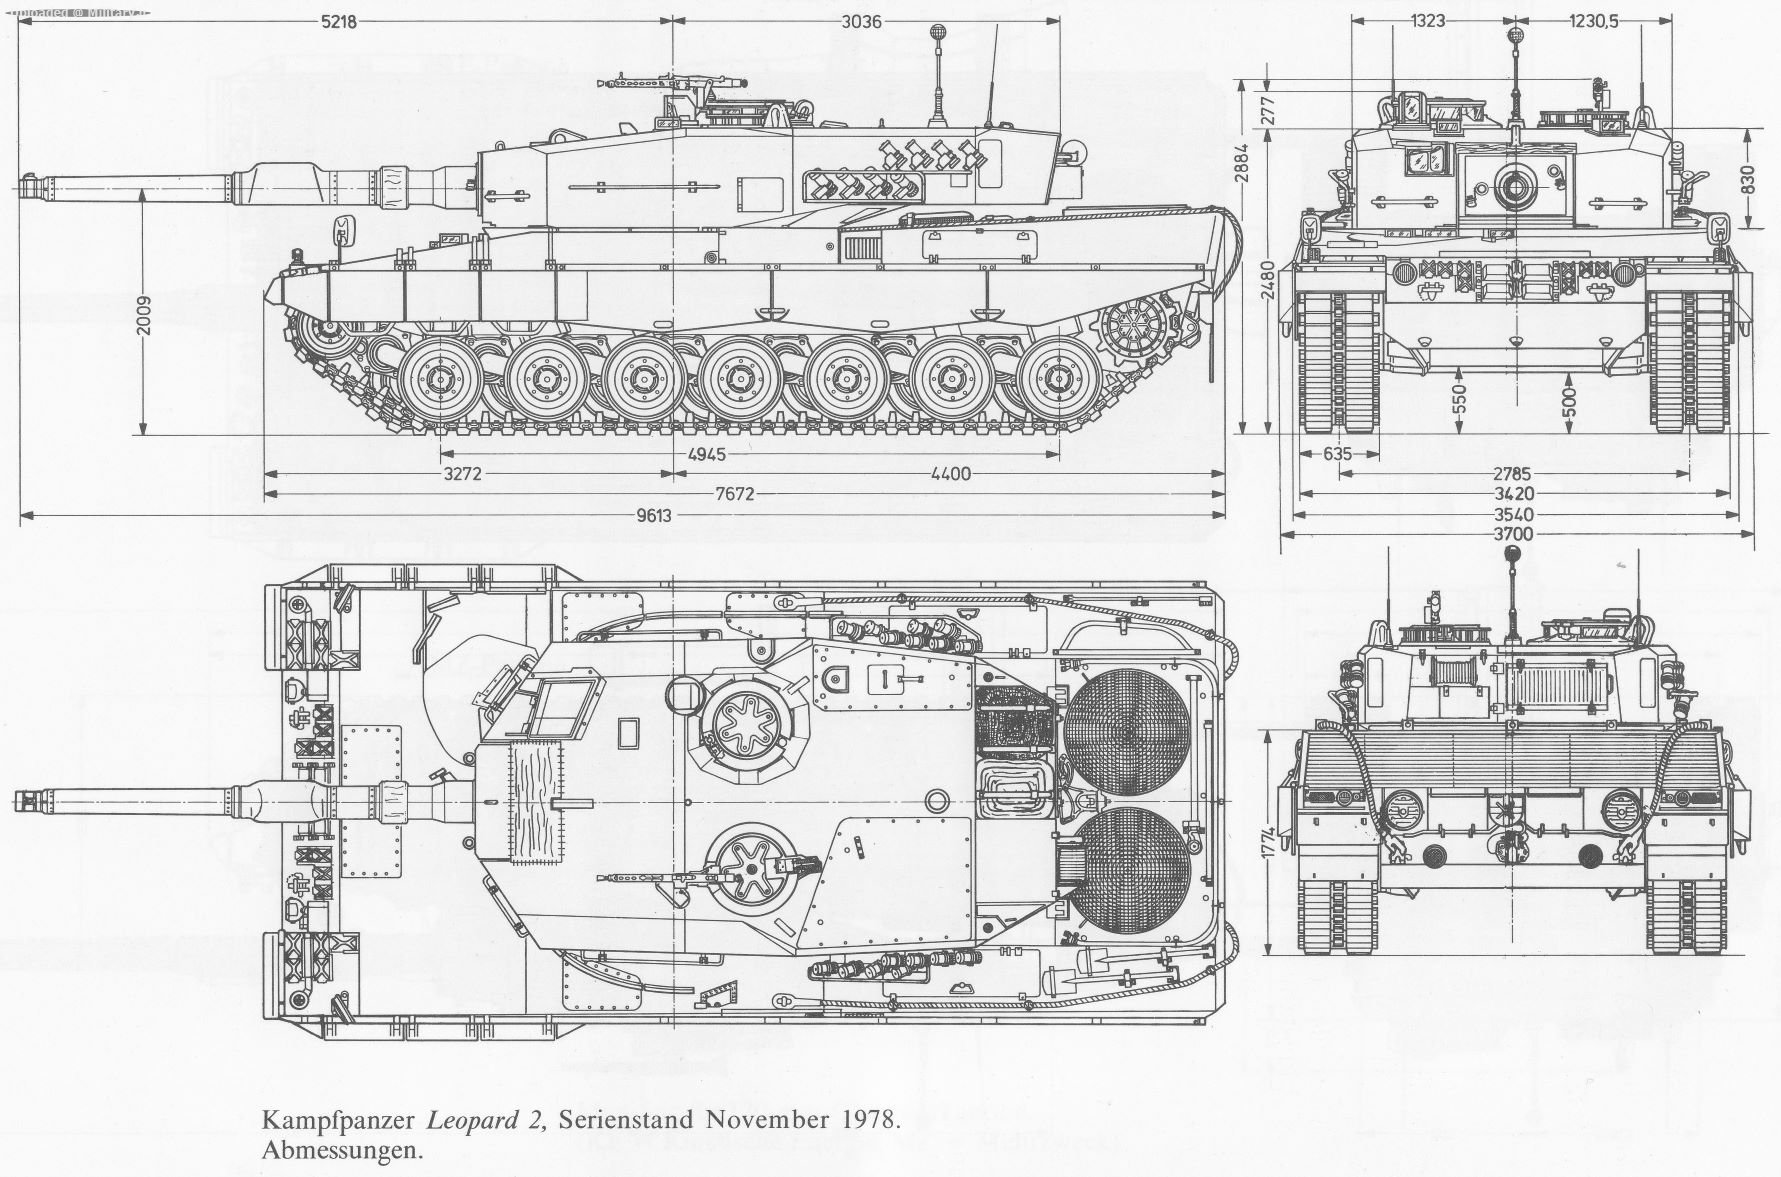 Kampfpanzer-Leopard-2-Serienstand-Novemb